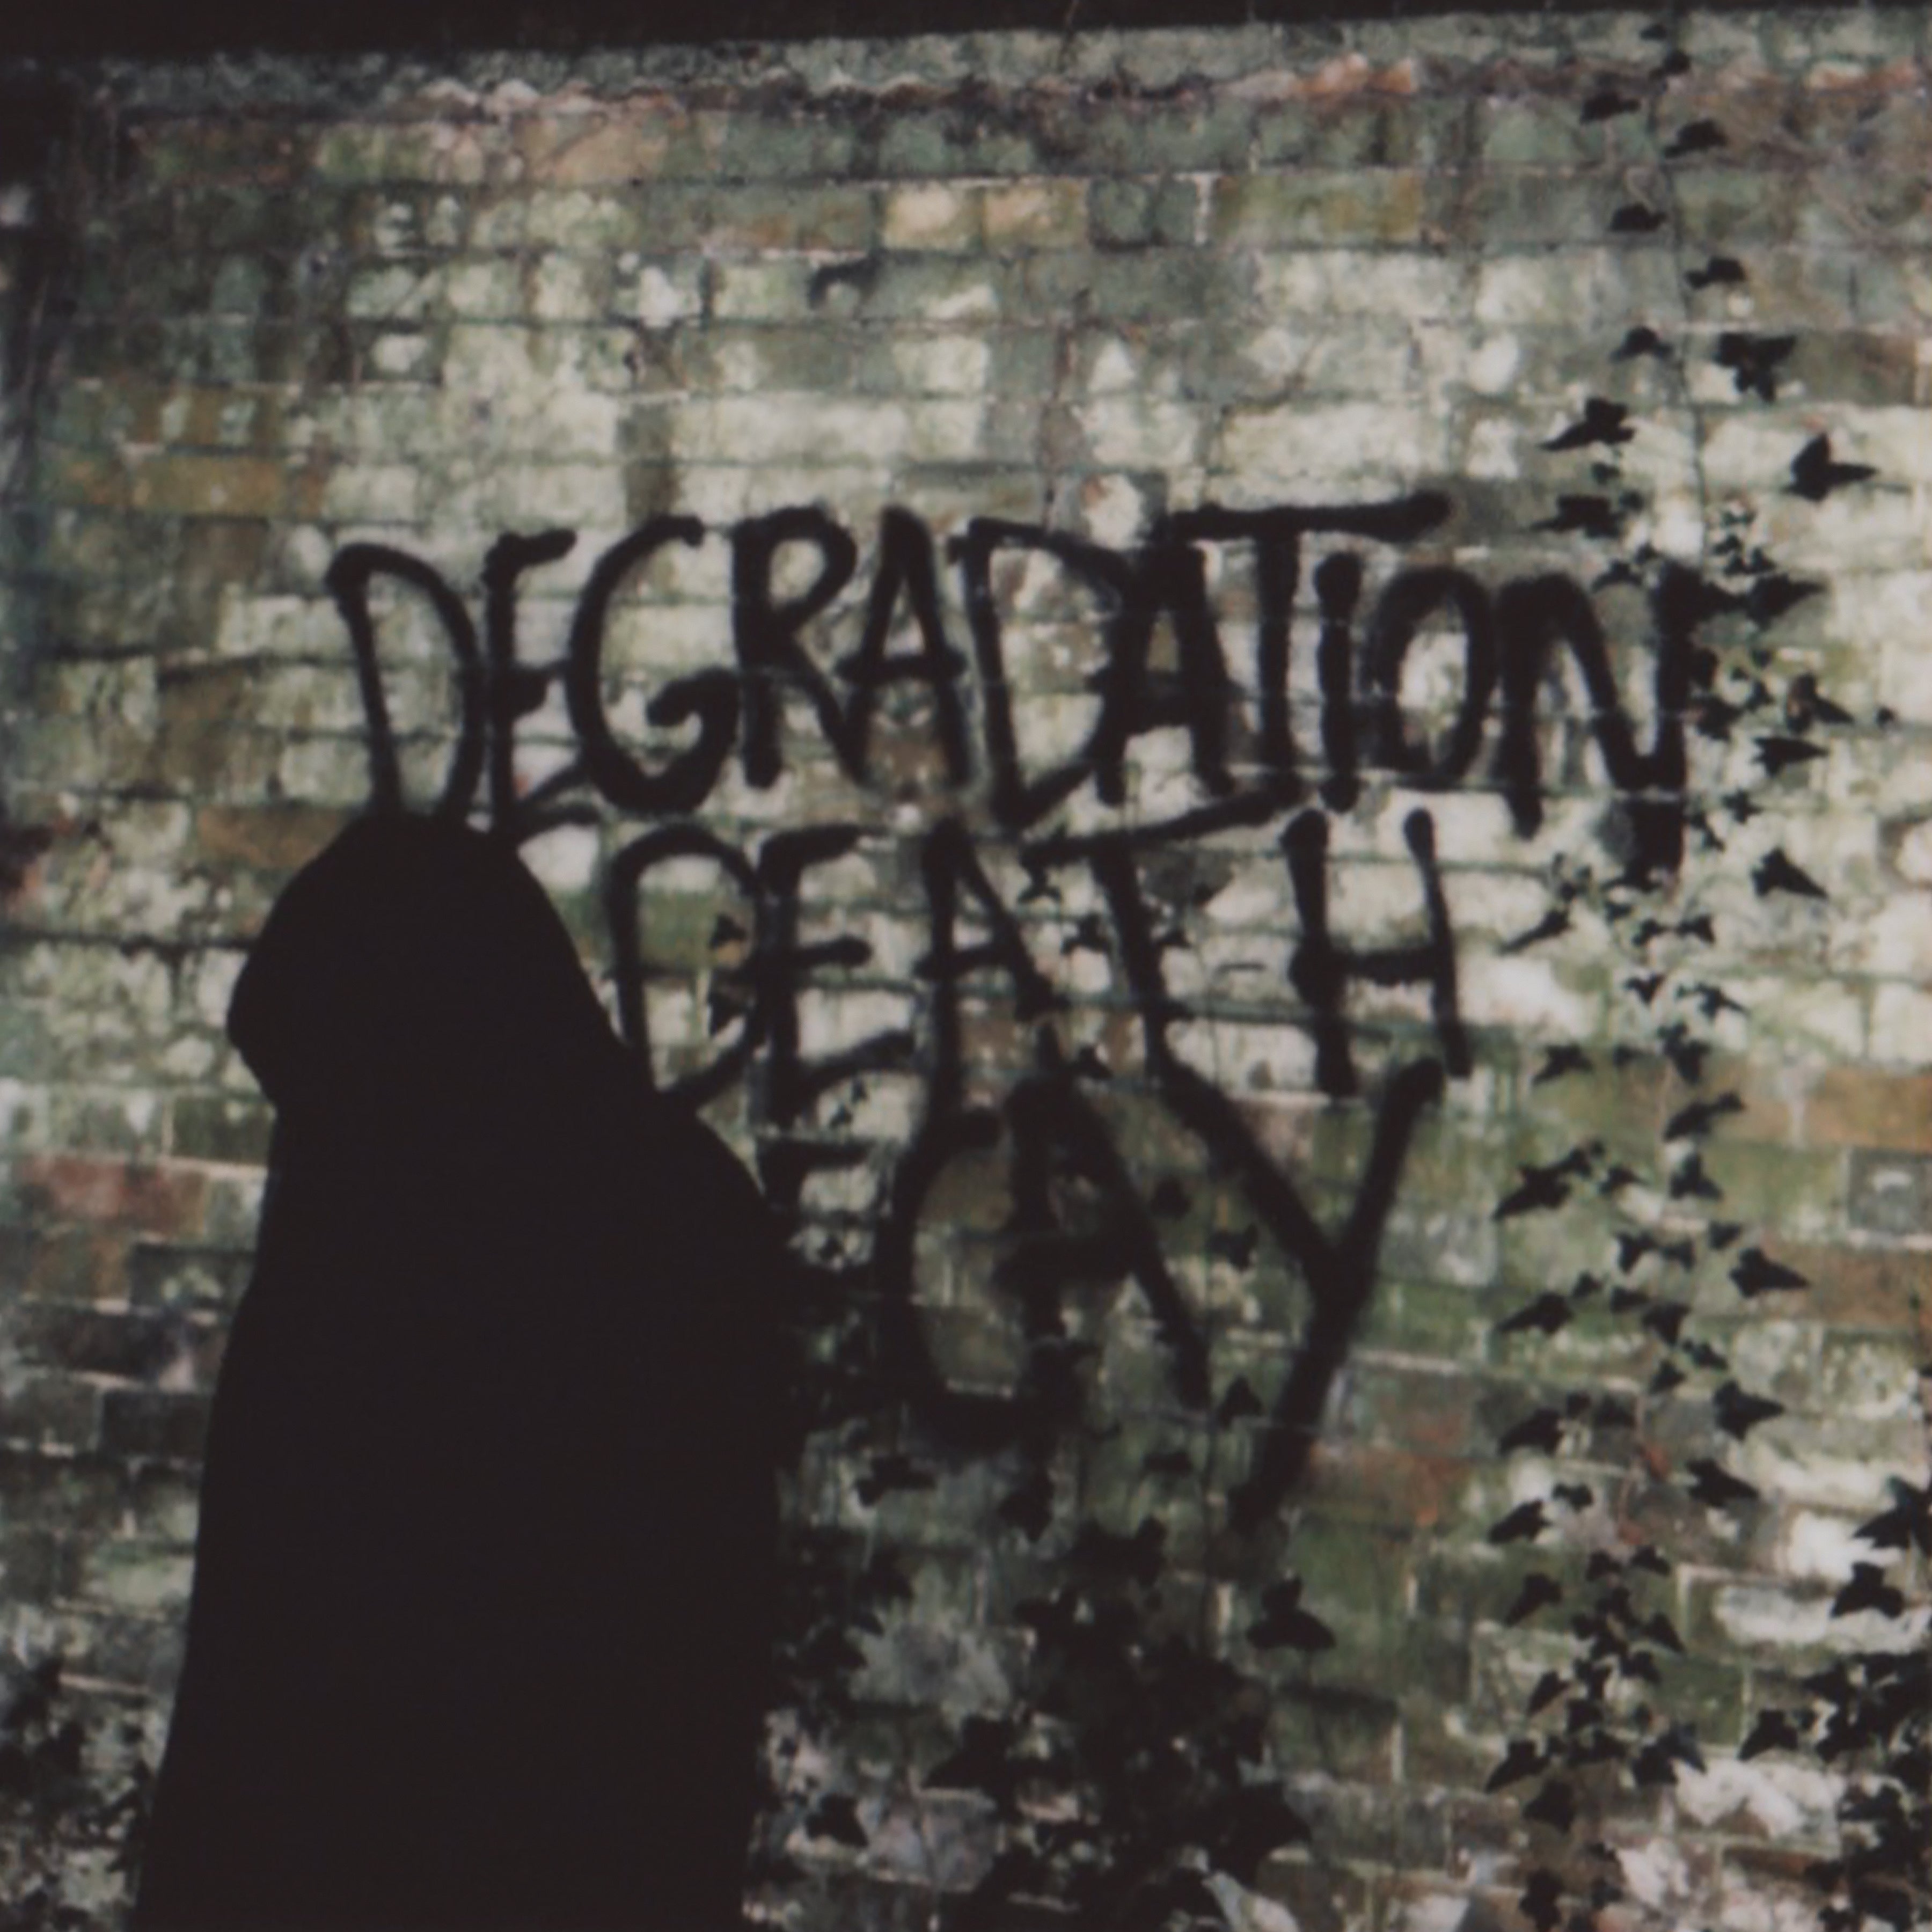 Ian Miles - Degradation Death Decay